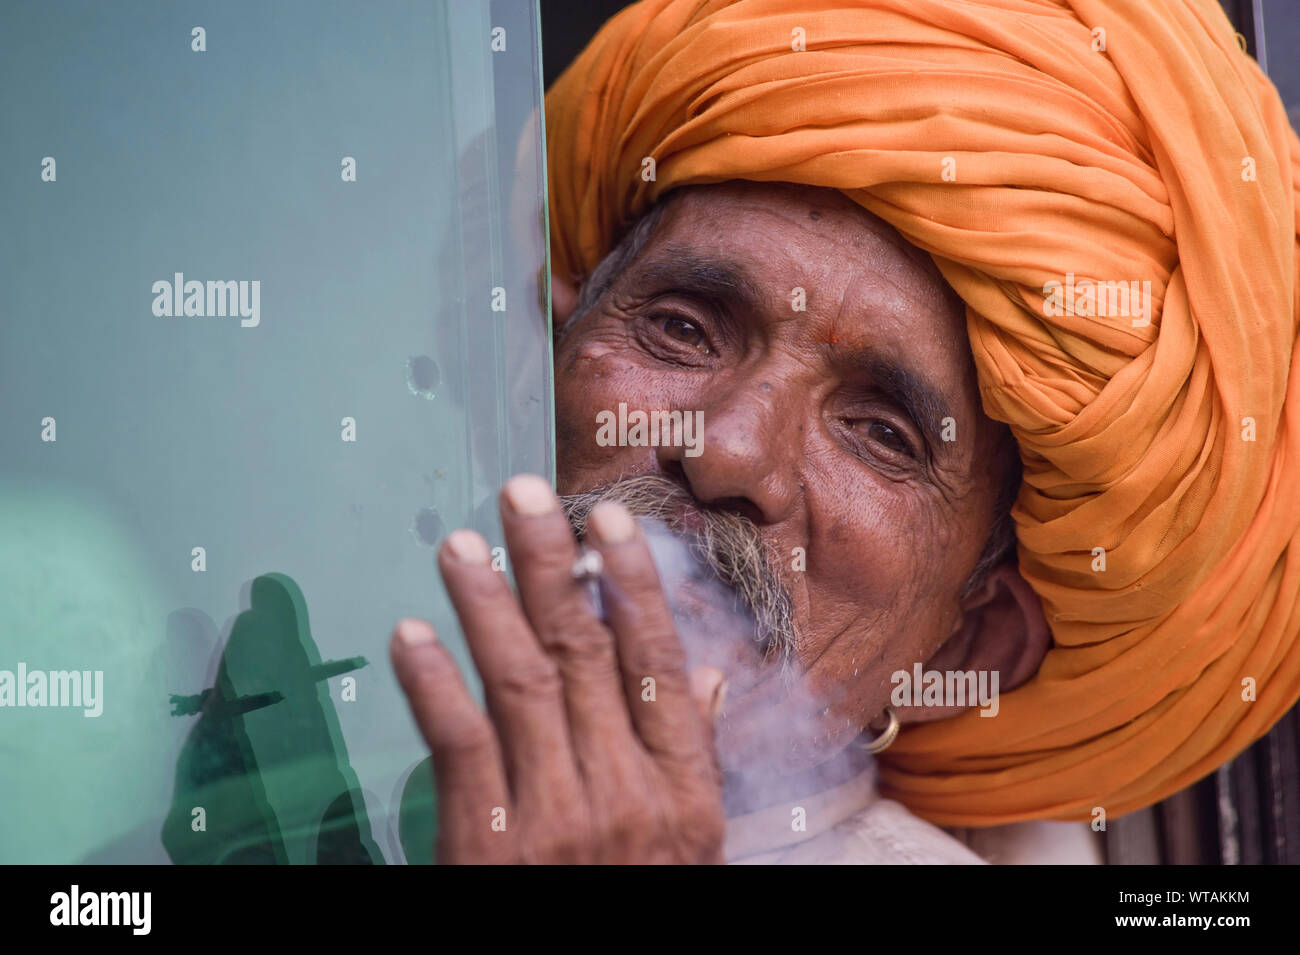 RajasthanÂ´s man with big orange turban smokes in the bus window Stock Photo